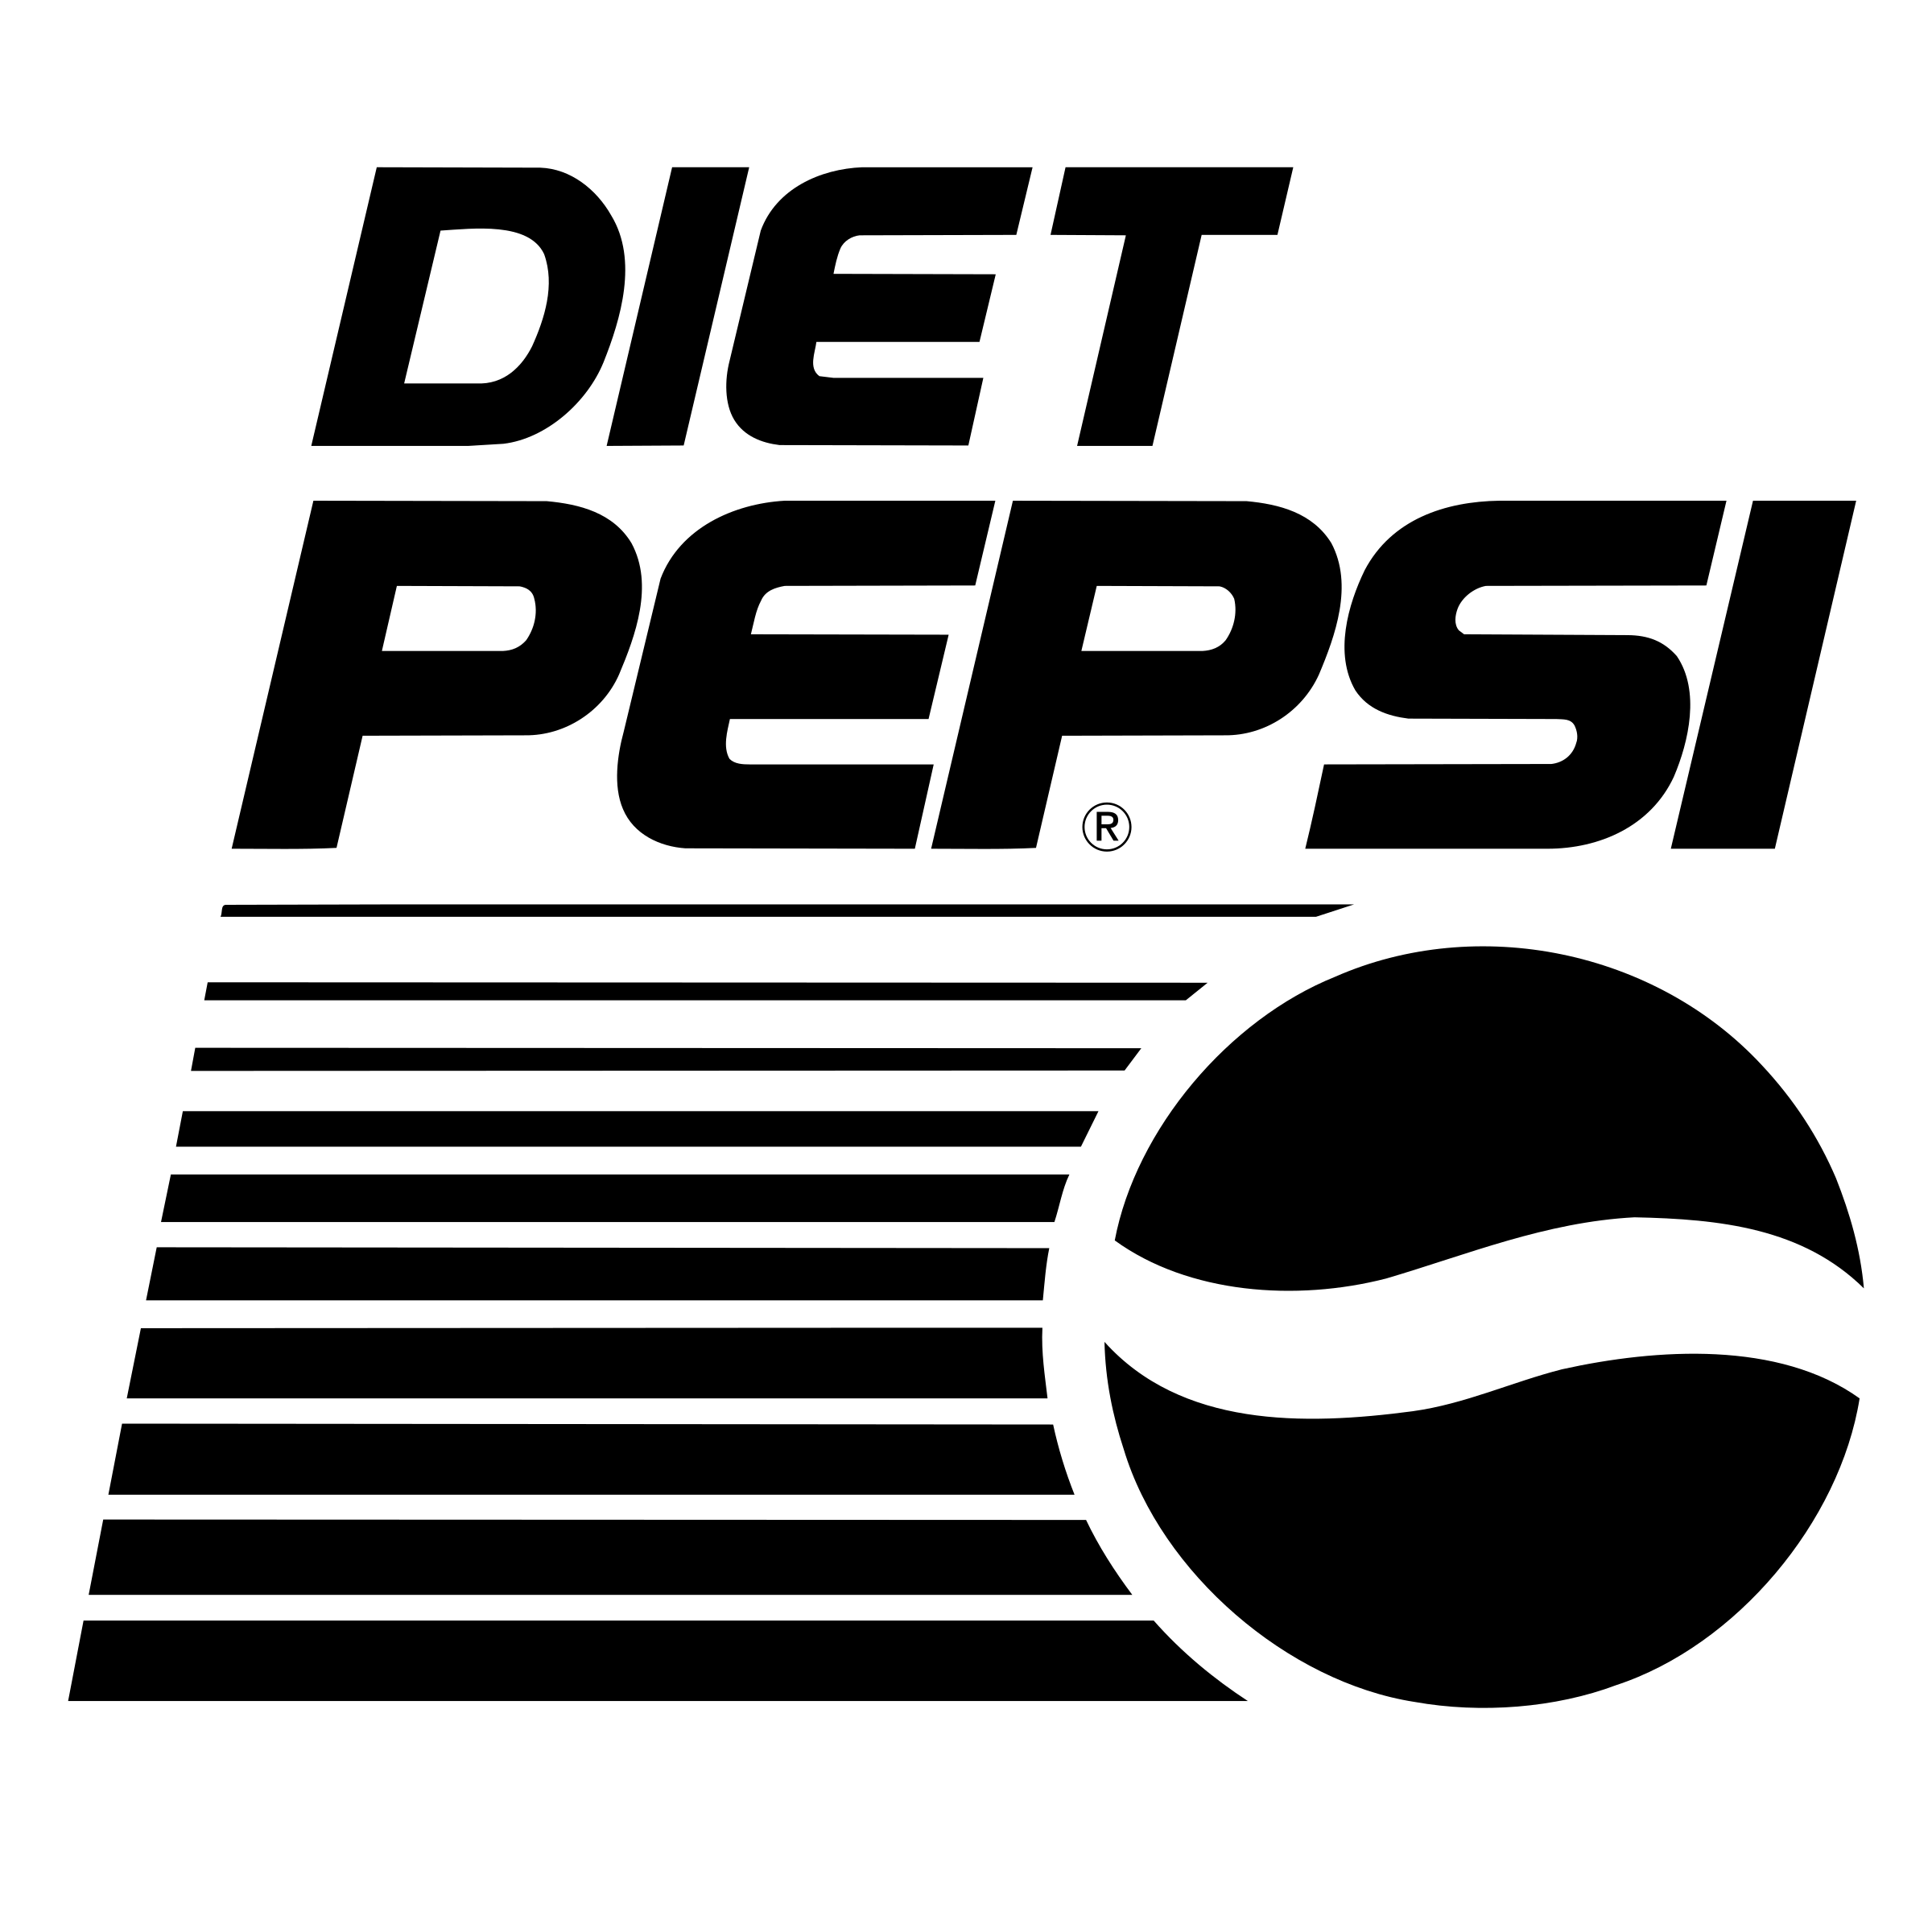 Black and White Pepsi Logo - Diet Pepsi Logo PNG Transparent & SVG Vector